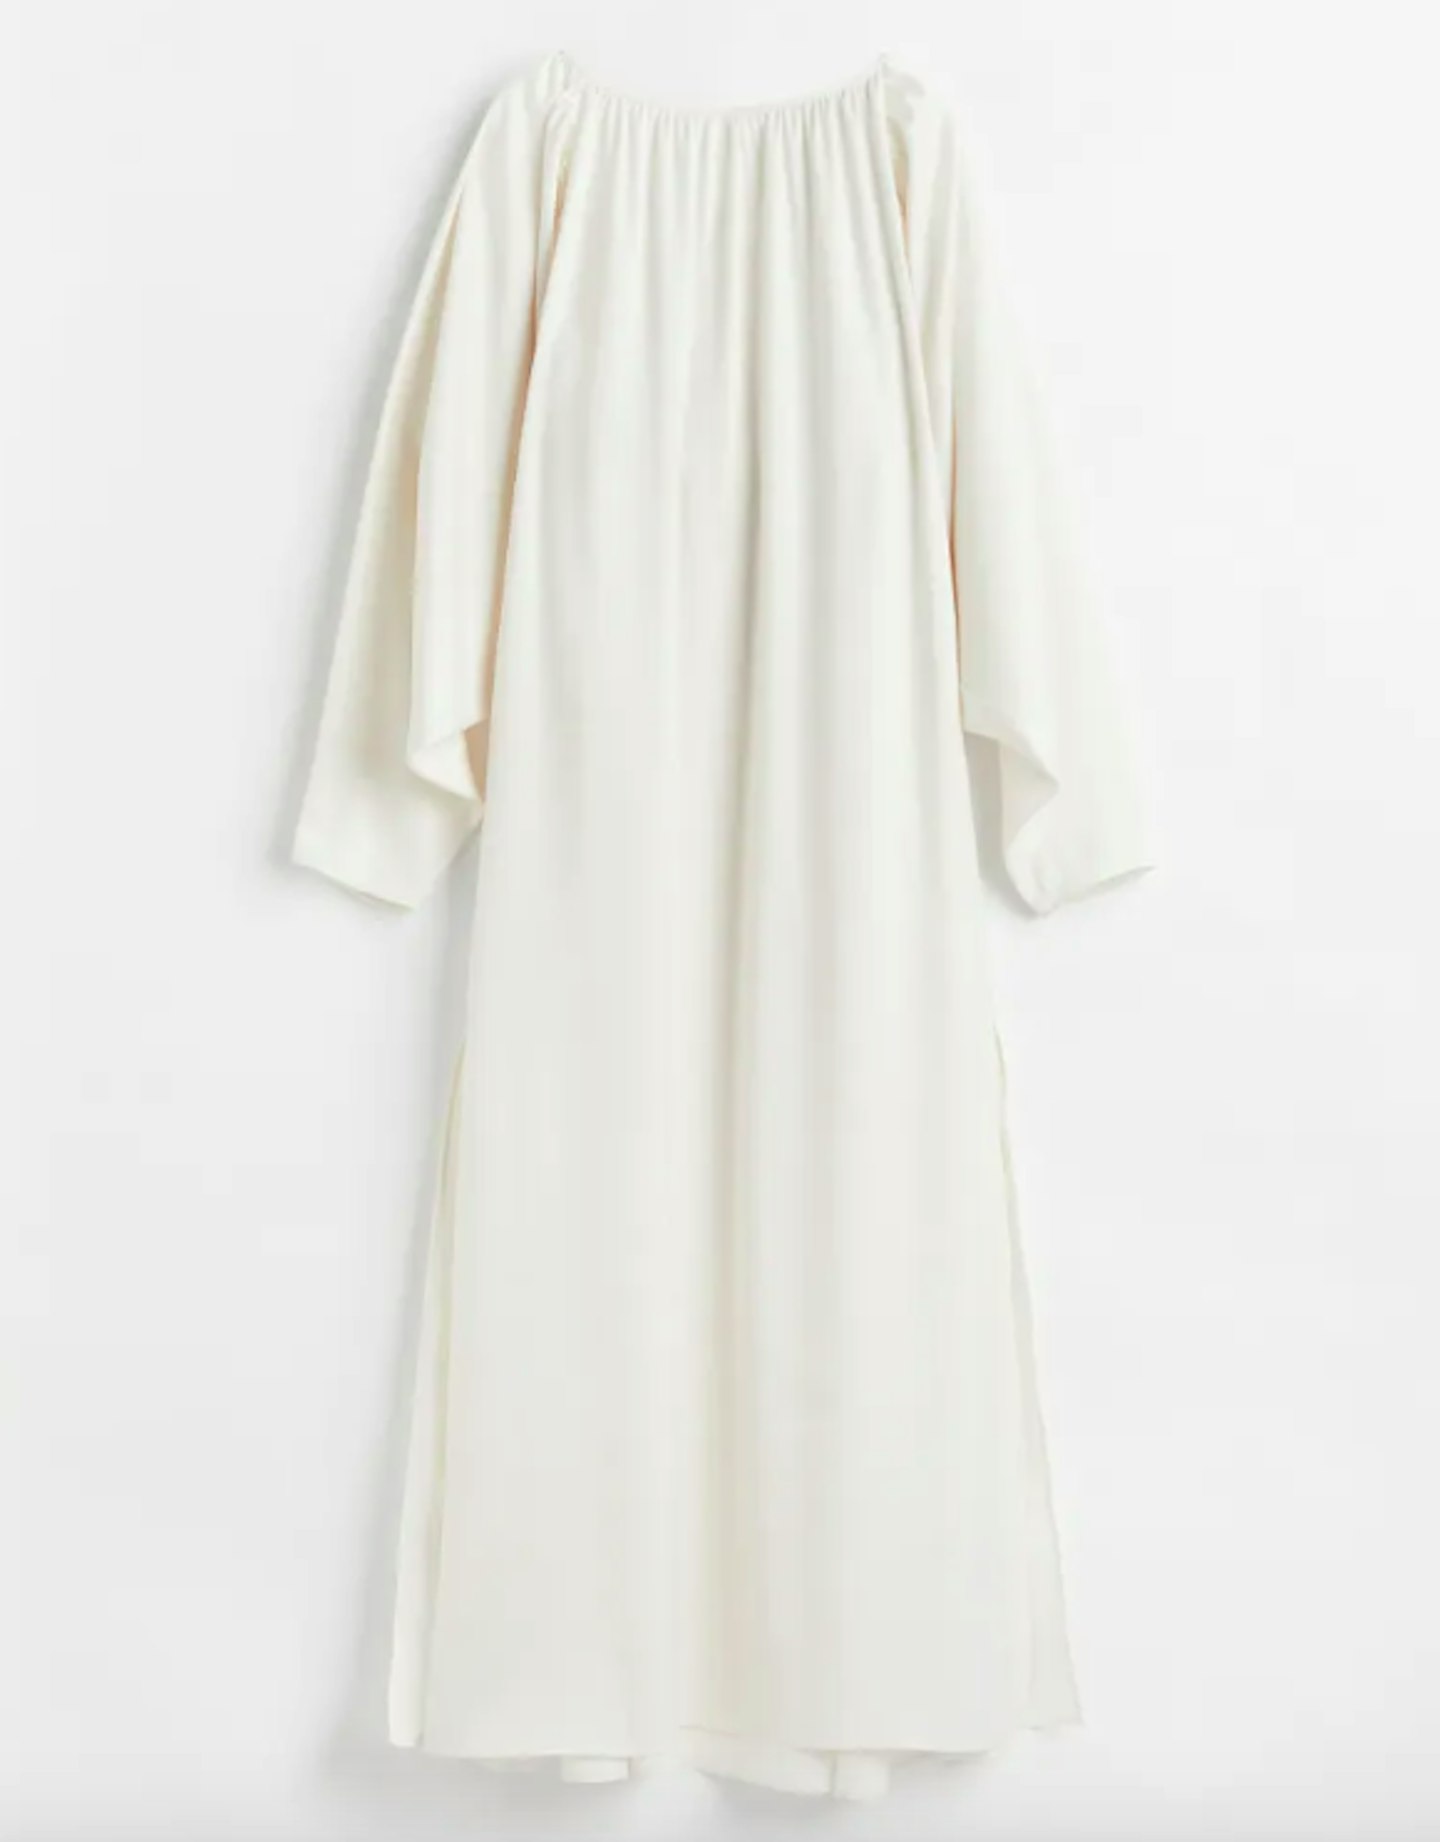 H&M, Voluminous Satin Dress, £24.99